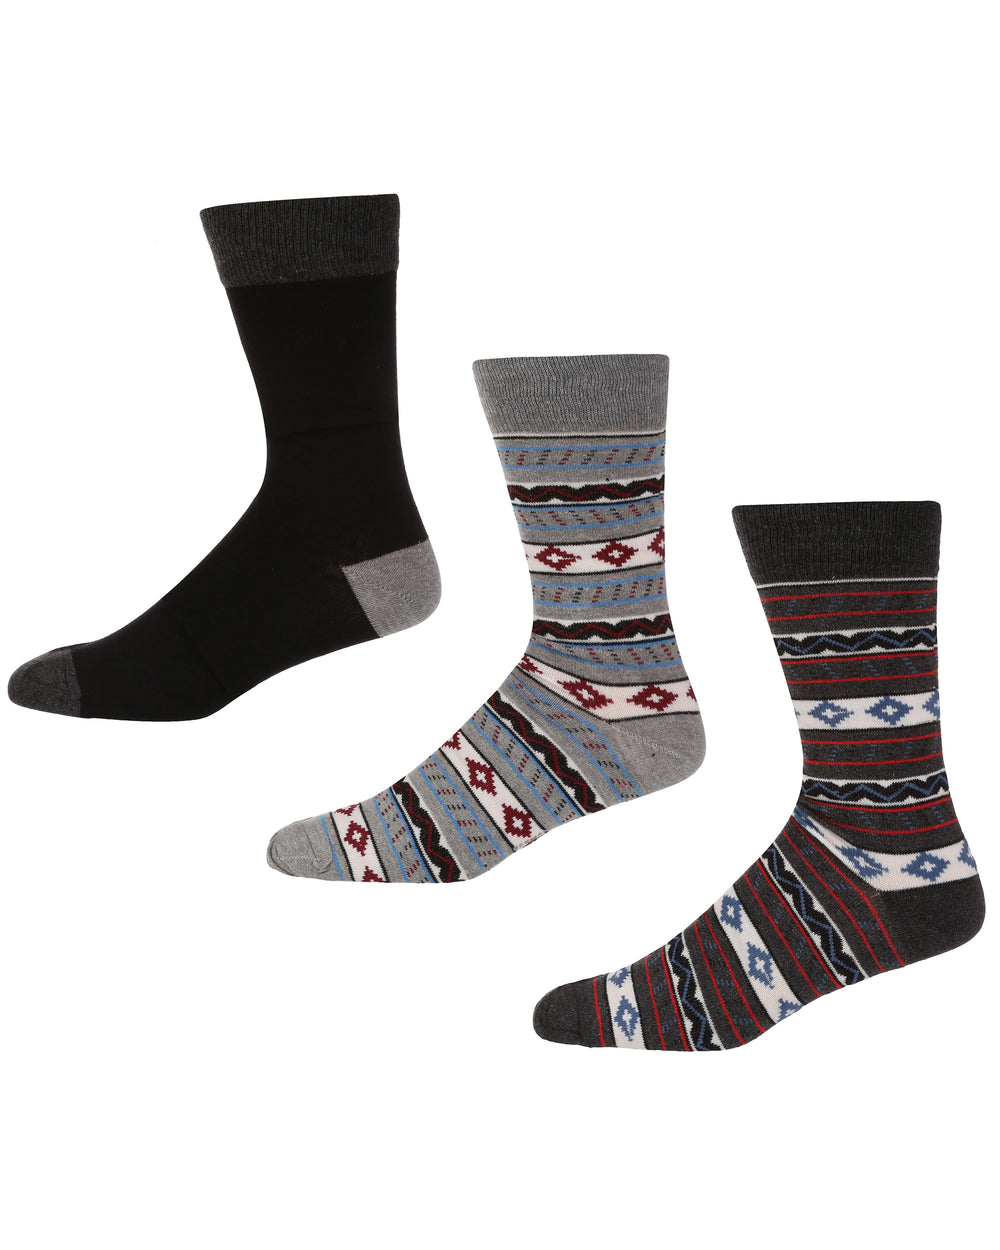 High Chaparral Men's 3-Pack Socks - Black/Grey Fairisle